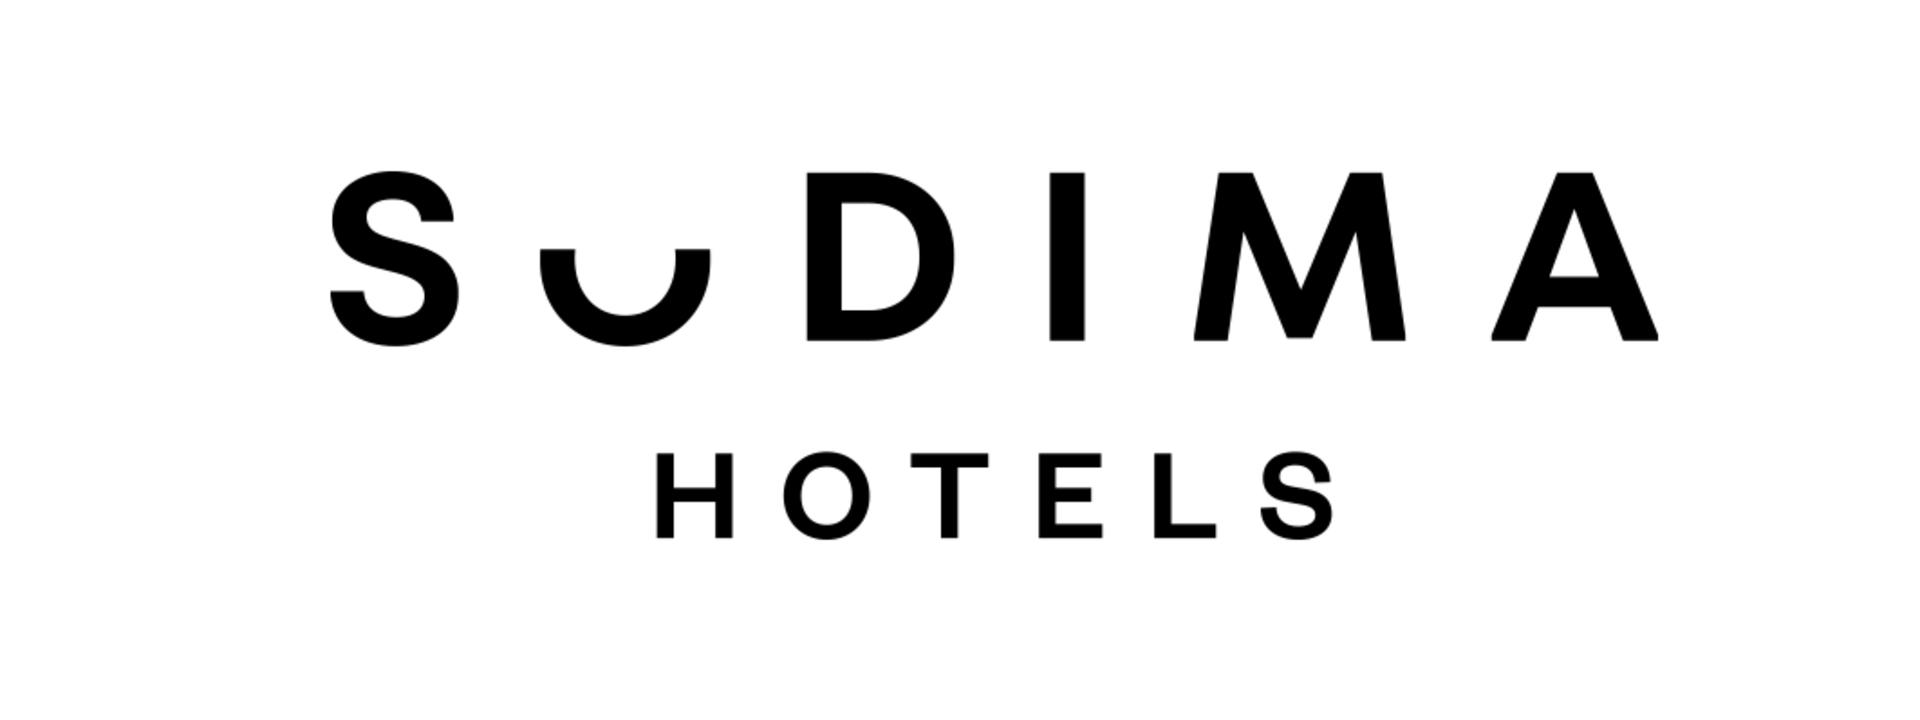 sudima-hotels-master-black-jpeg.jpg